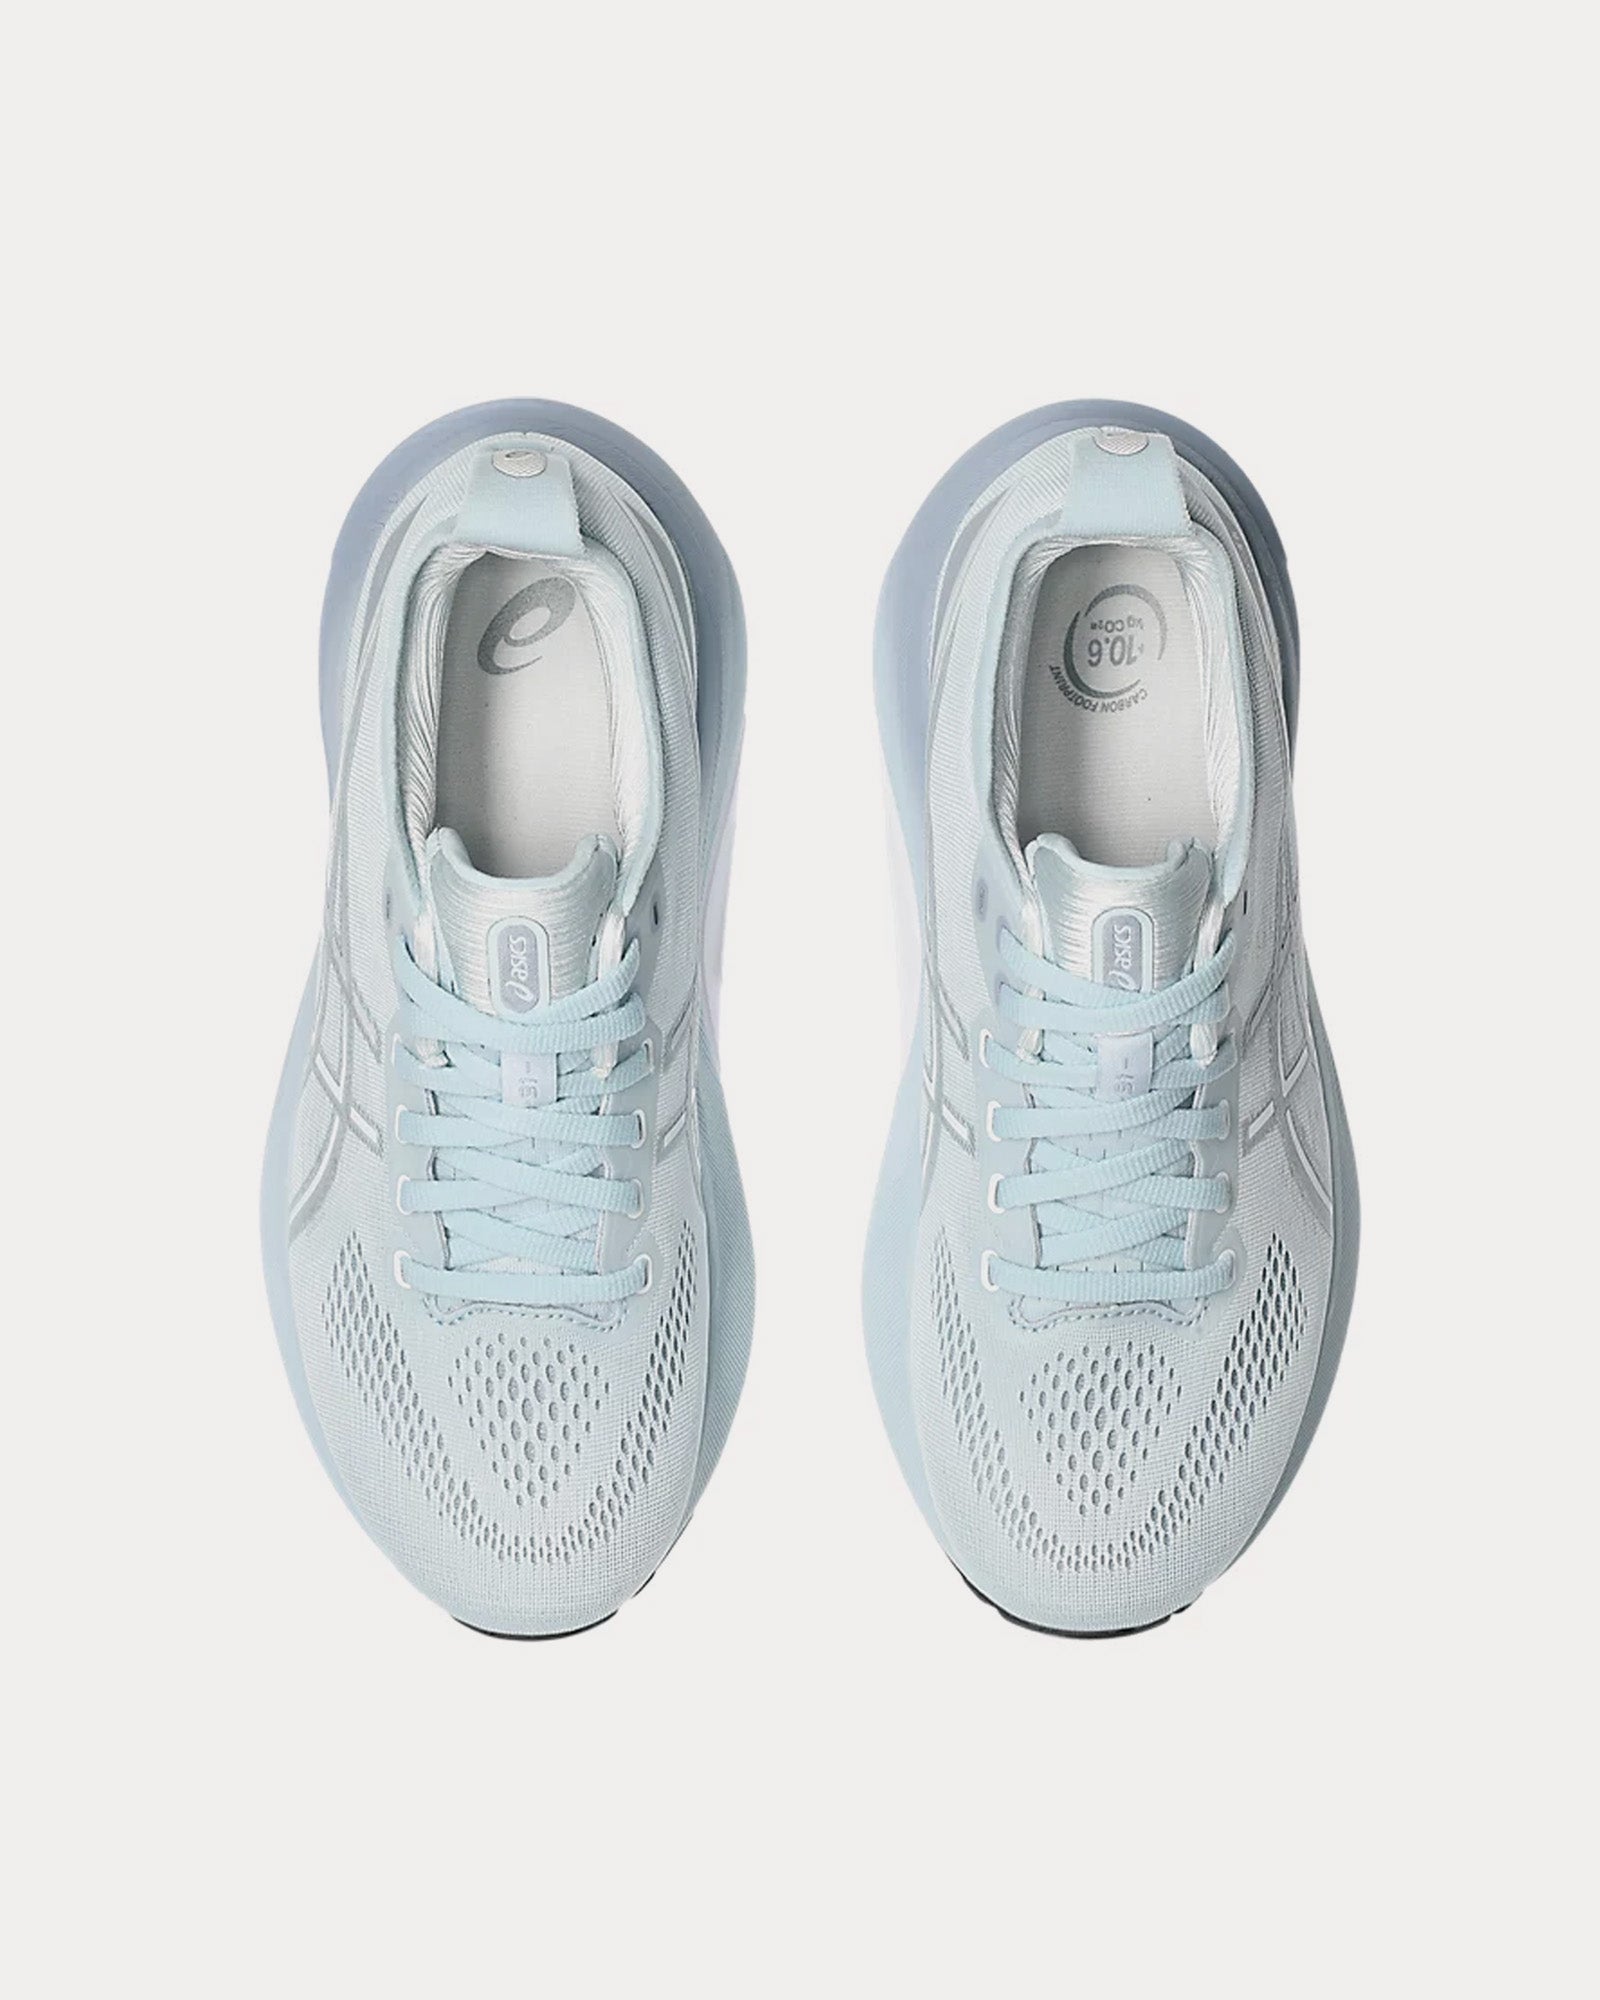 Asics - Gel-Kayano 31 Cool Grey / Pure Silver Running Shoes